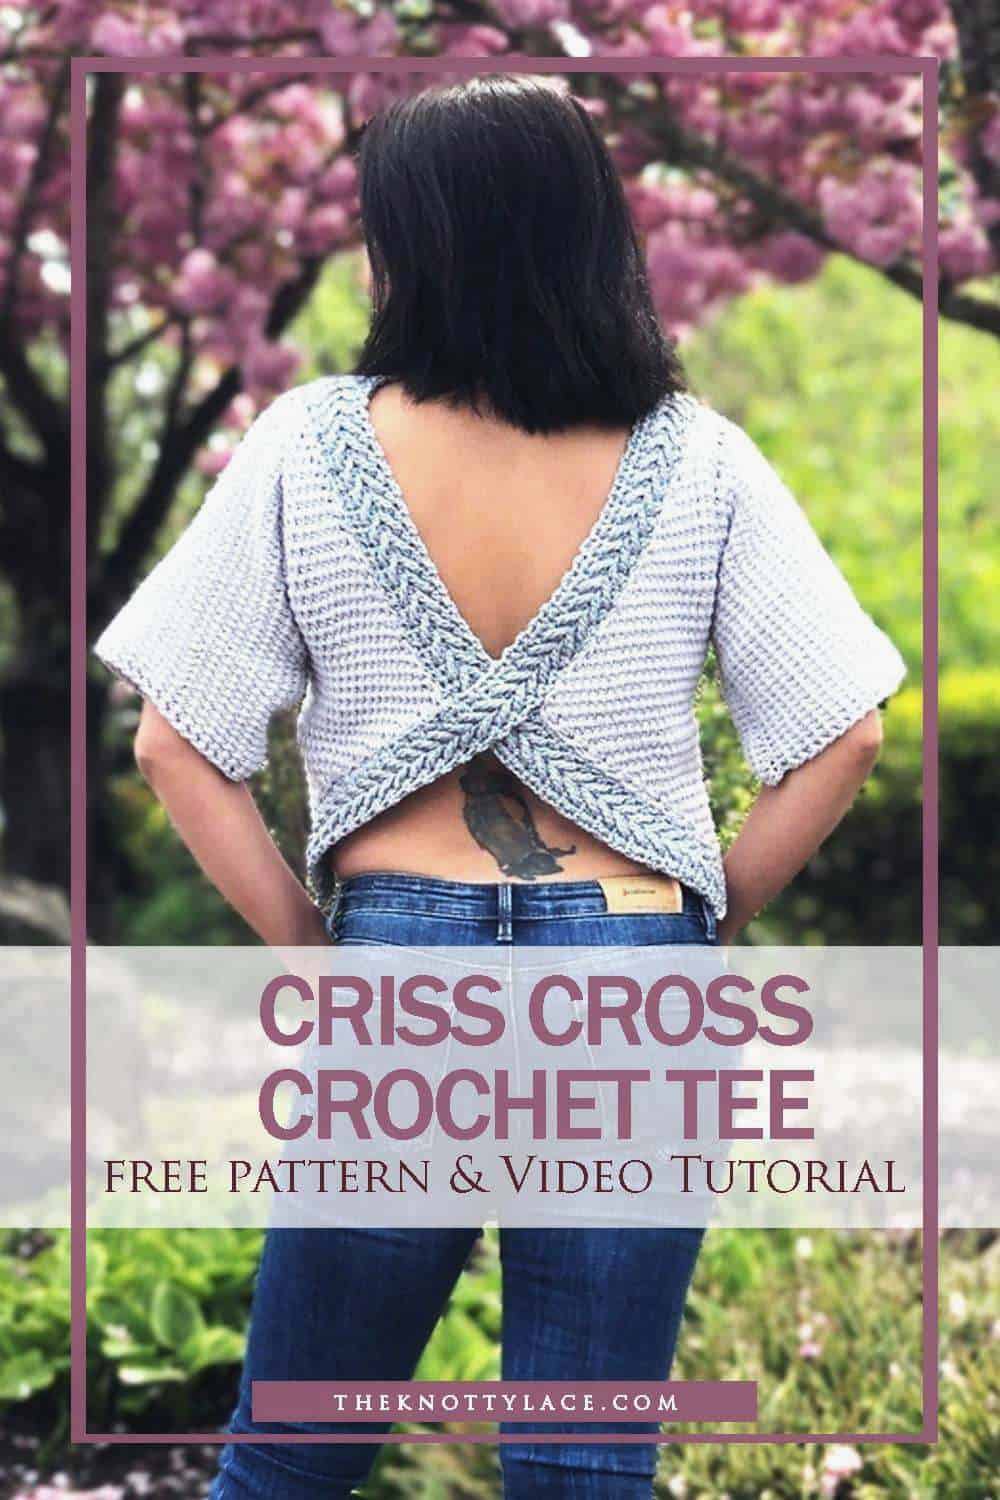 Criss Cross Crochet Tee Free Pattern & Video Tutorial